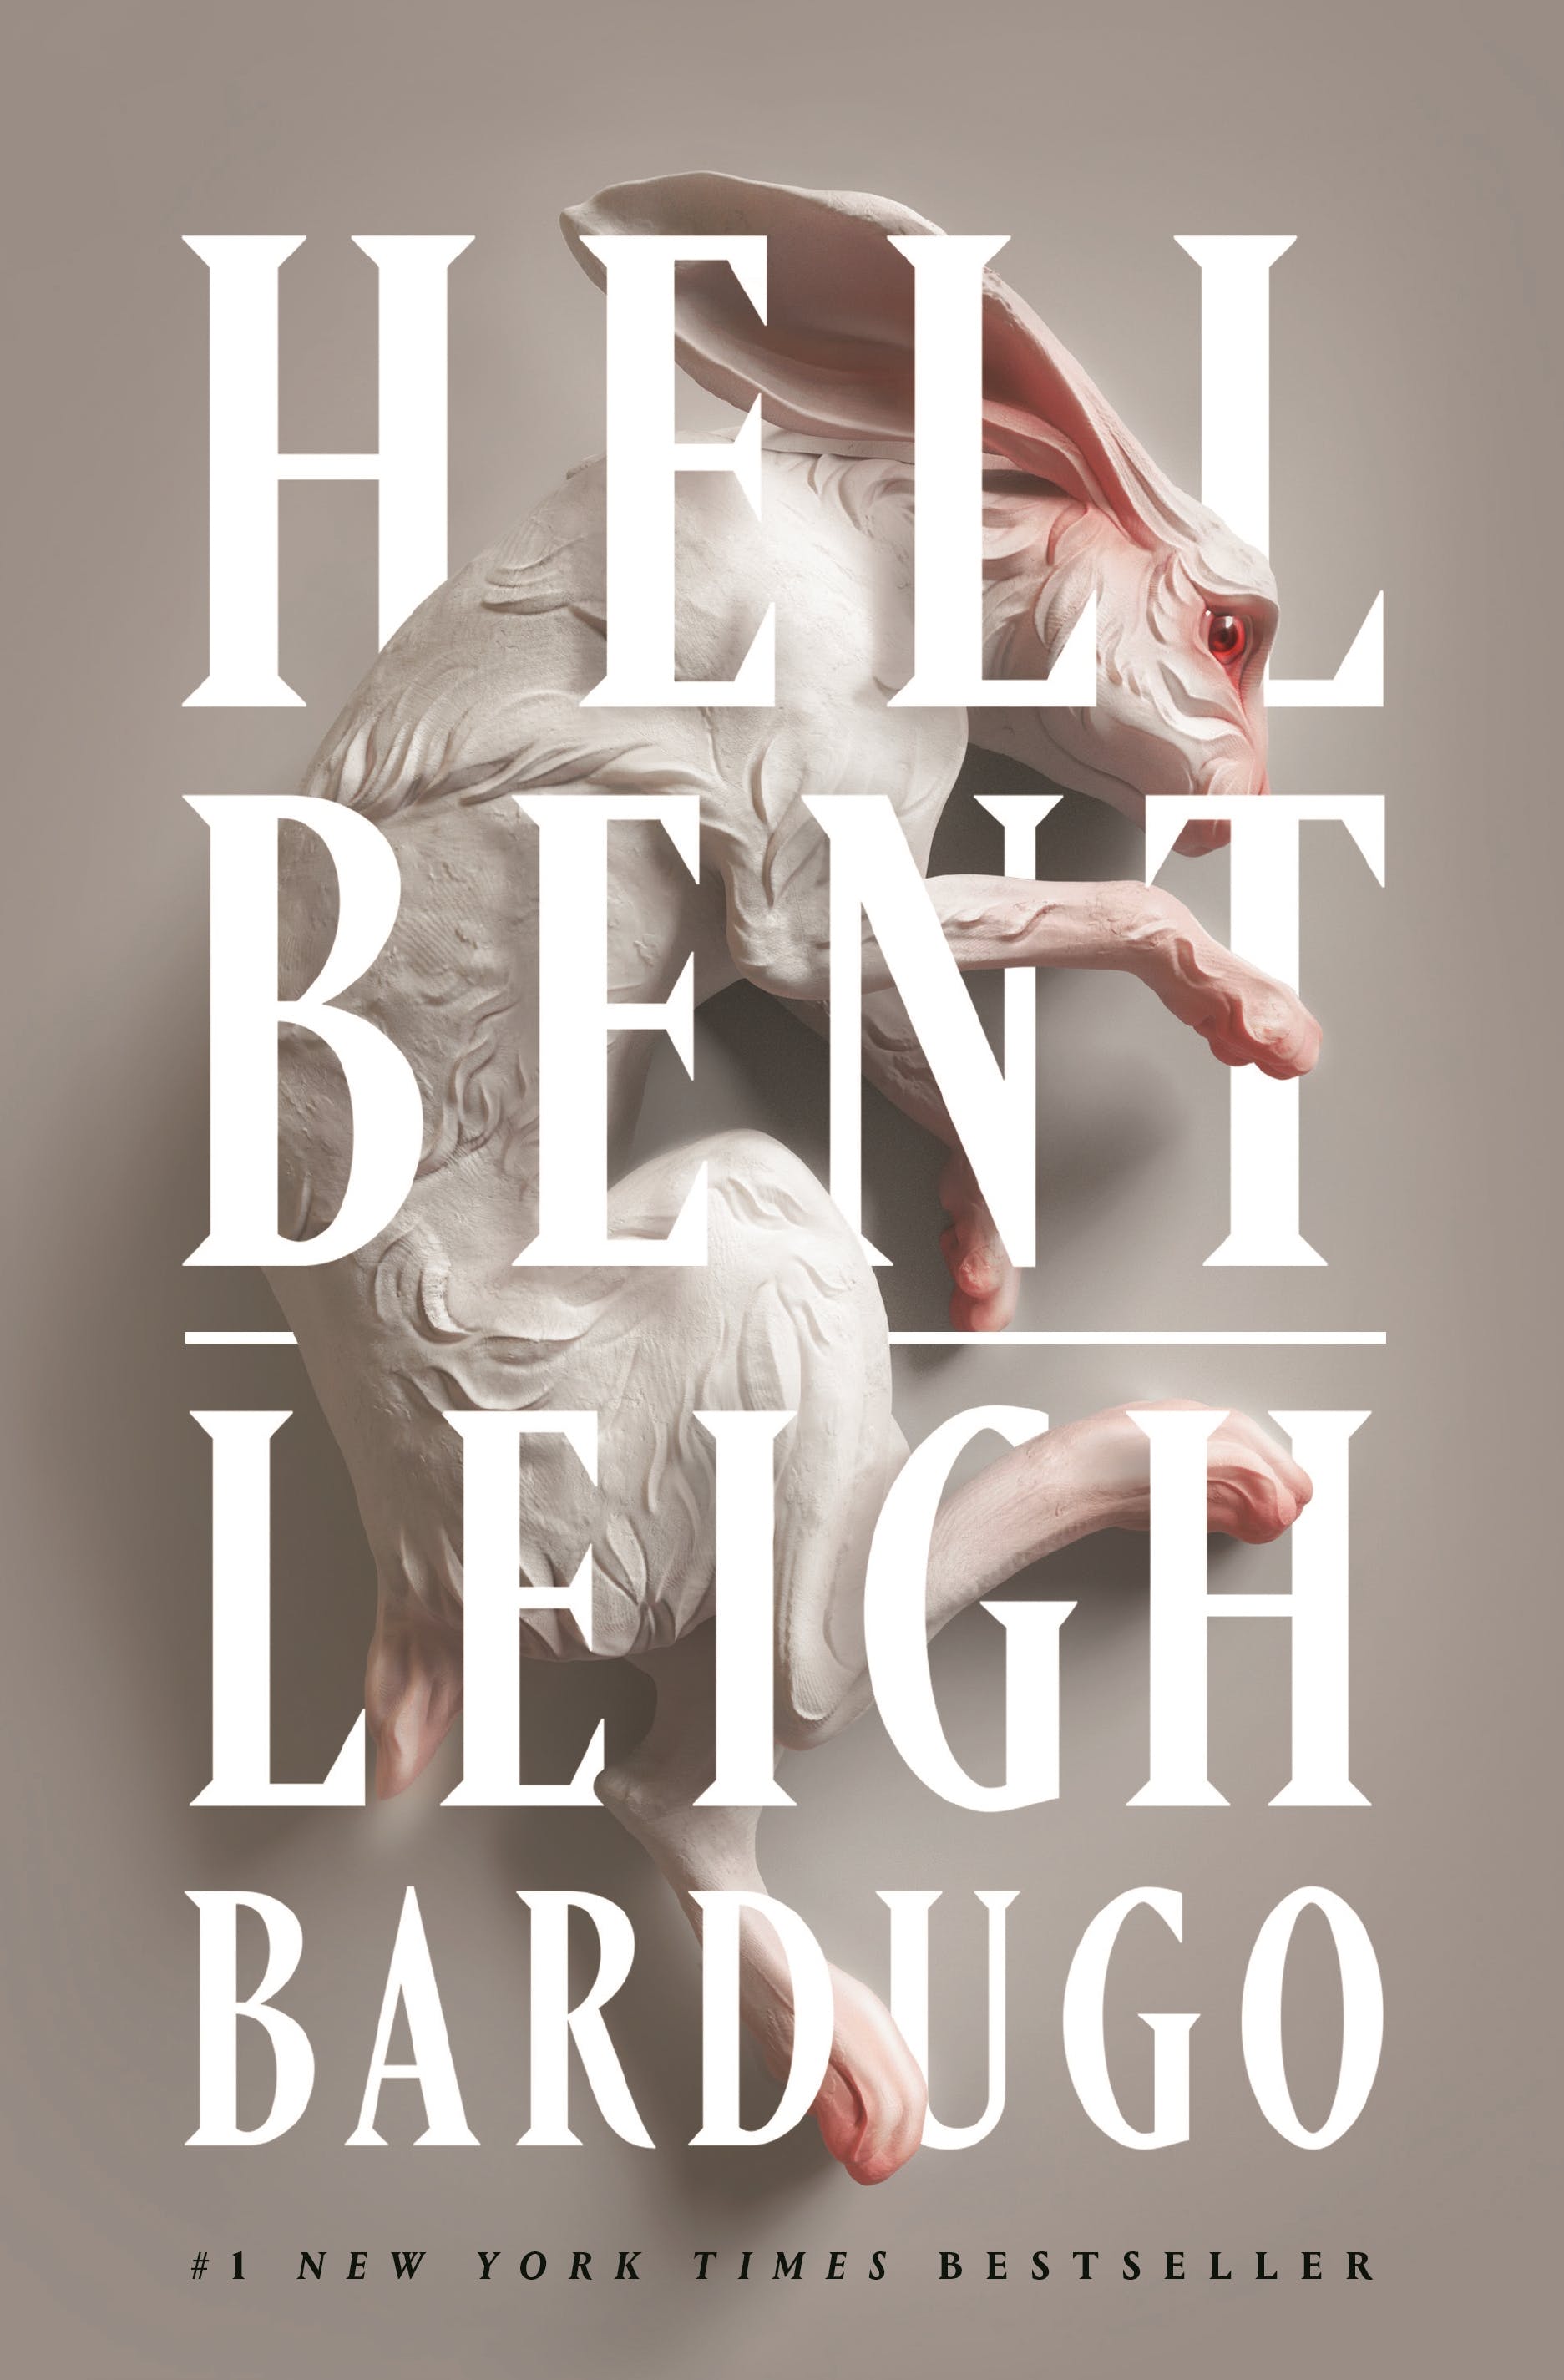 Bardugo Leigh Hell Bent 